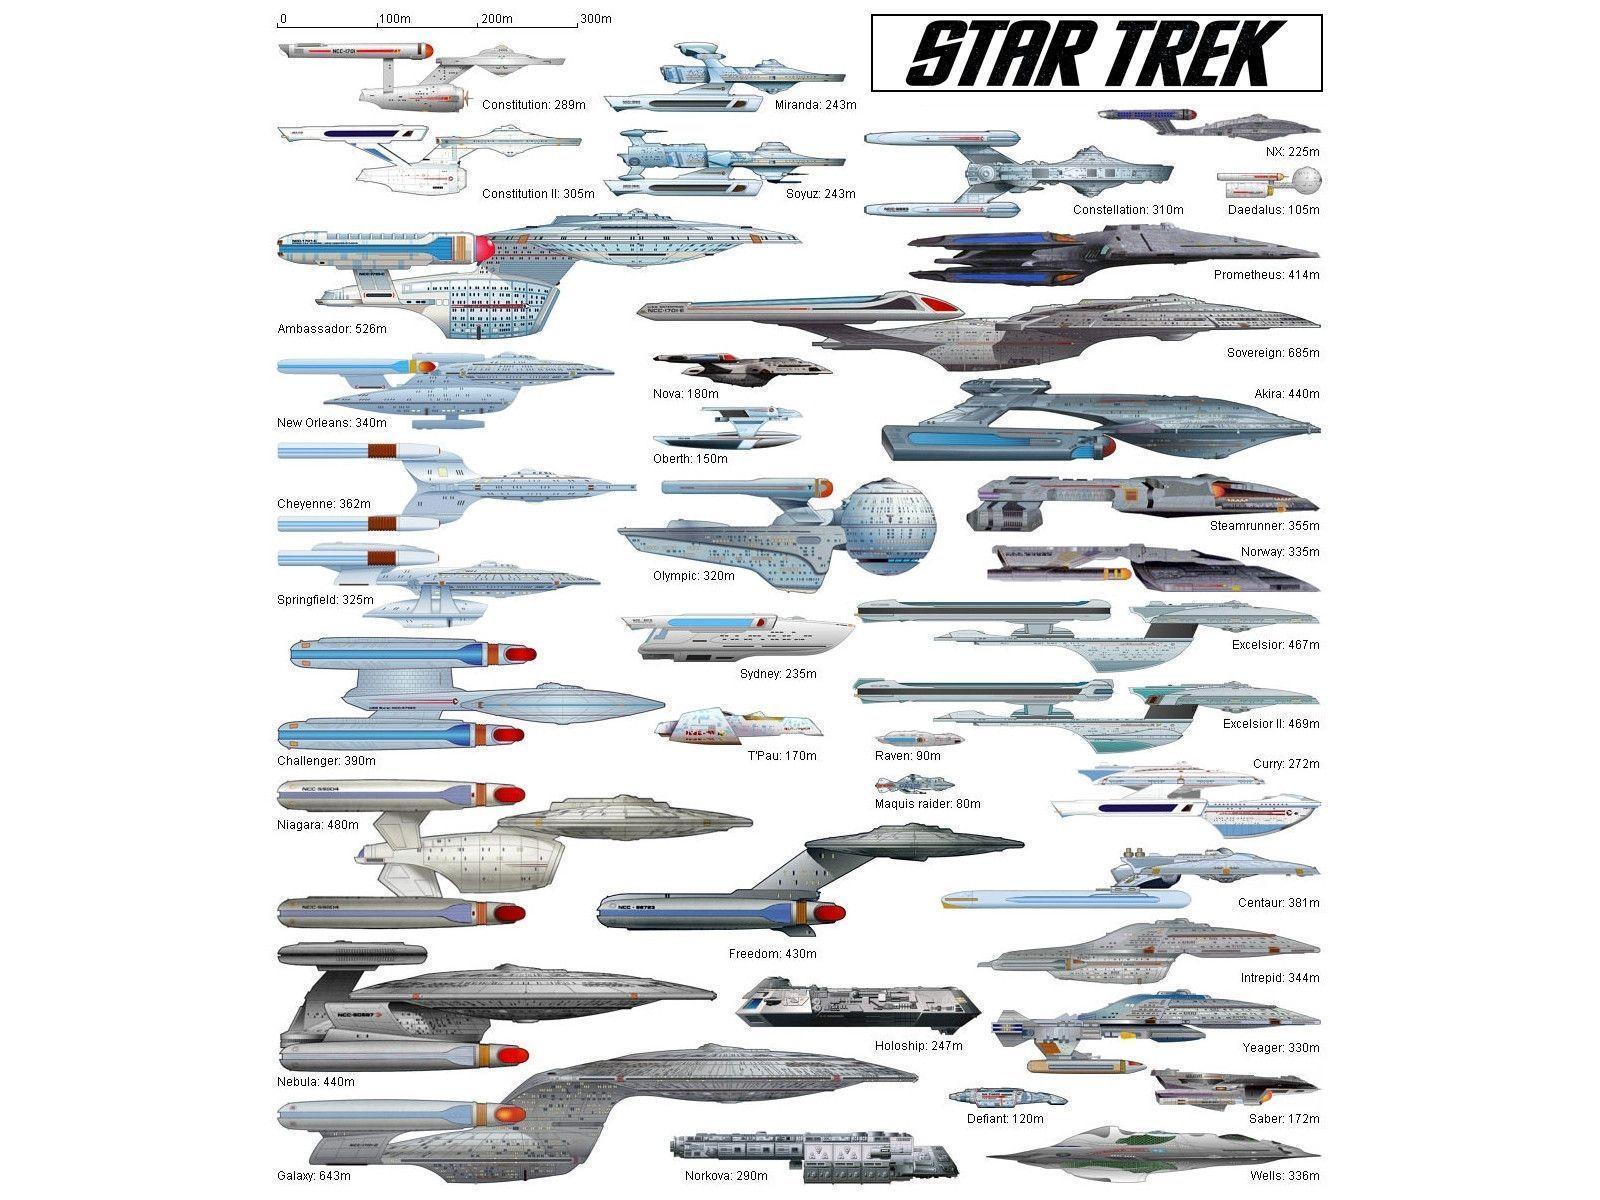 Star Trek Wallpaper Number 8 (1600 x 1200 Pixels)